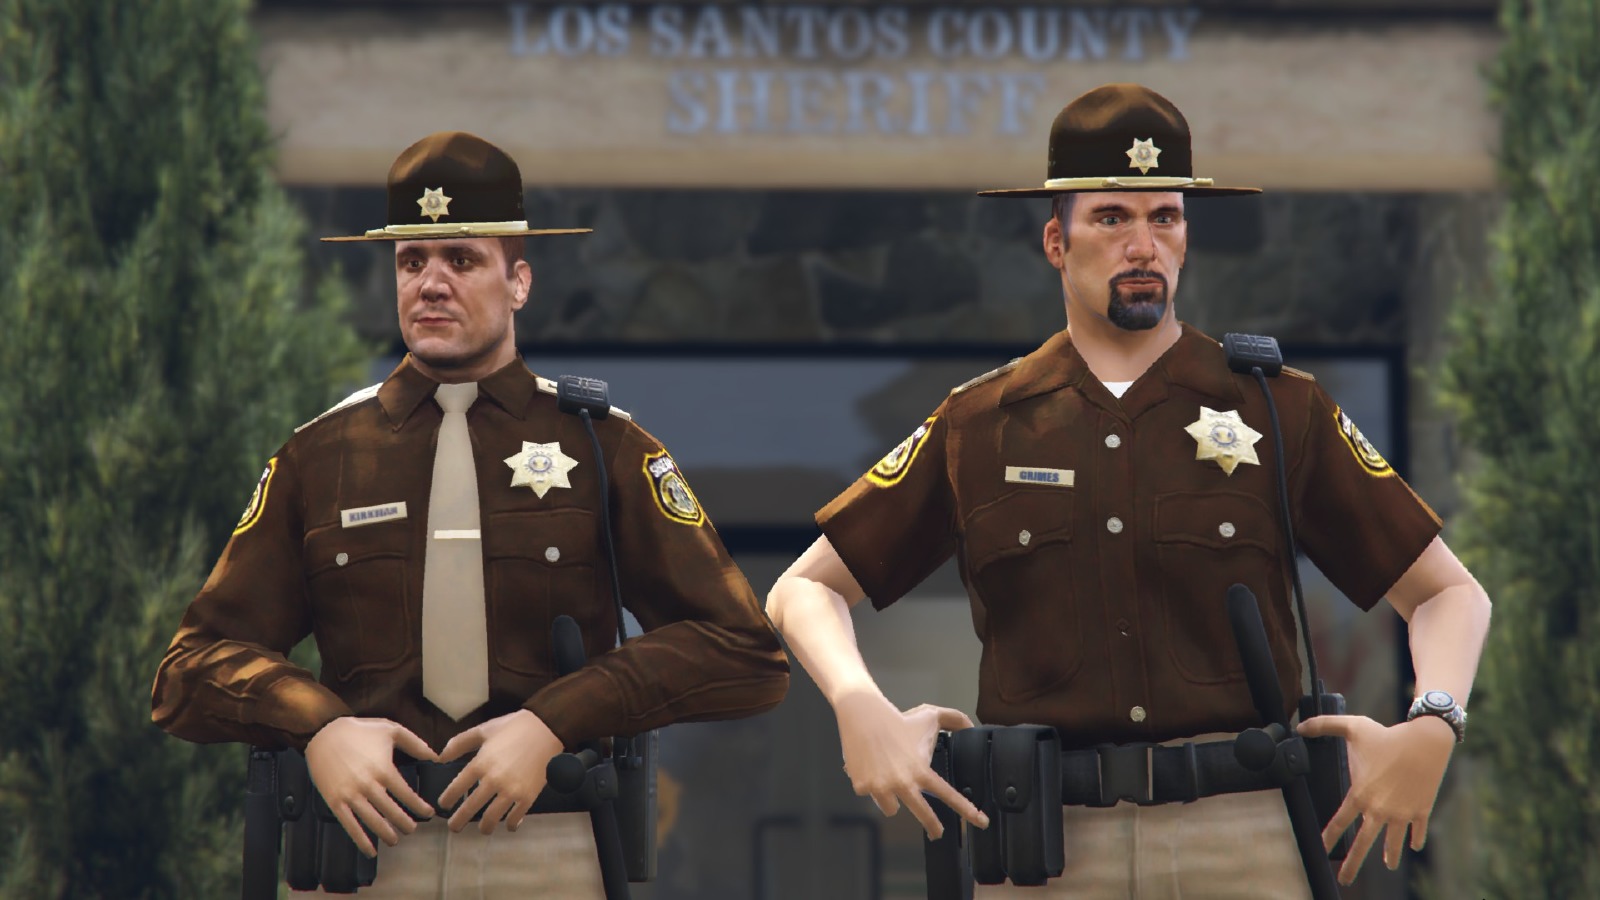 Los santos sheriff department gta 5 фото 48